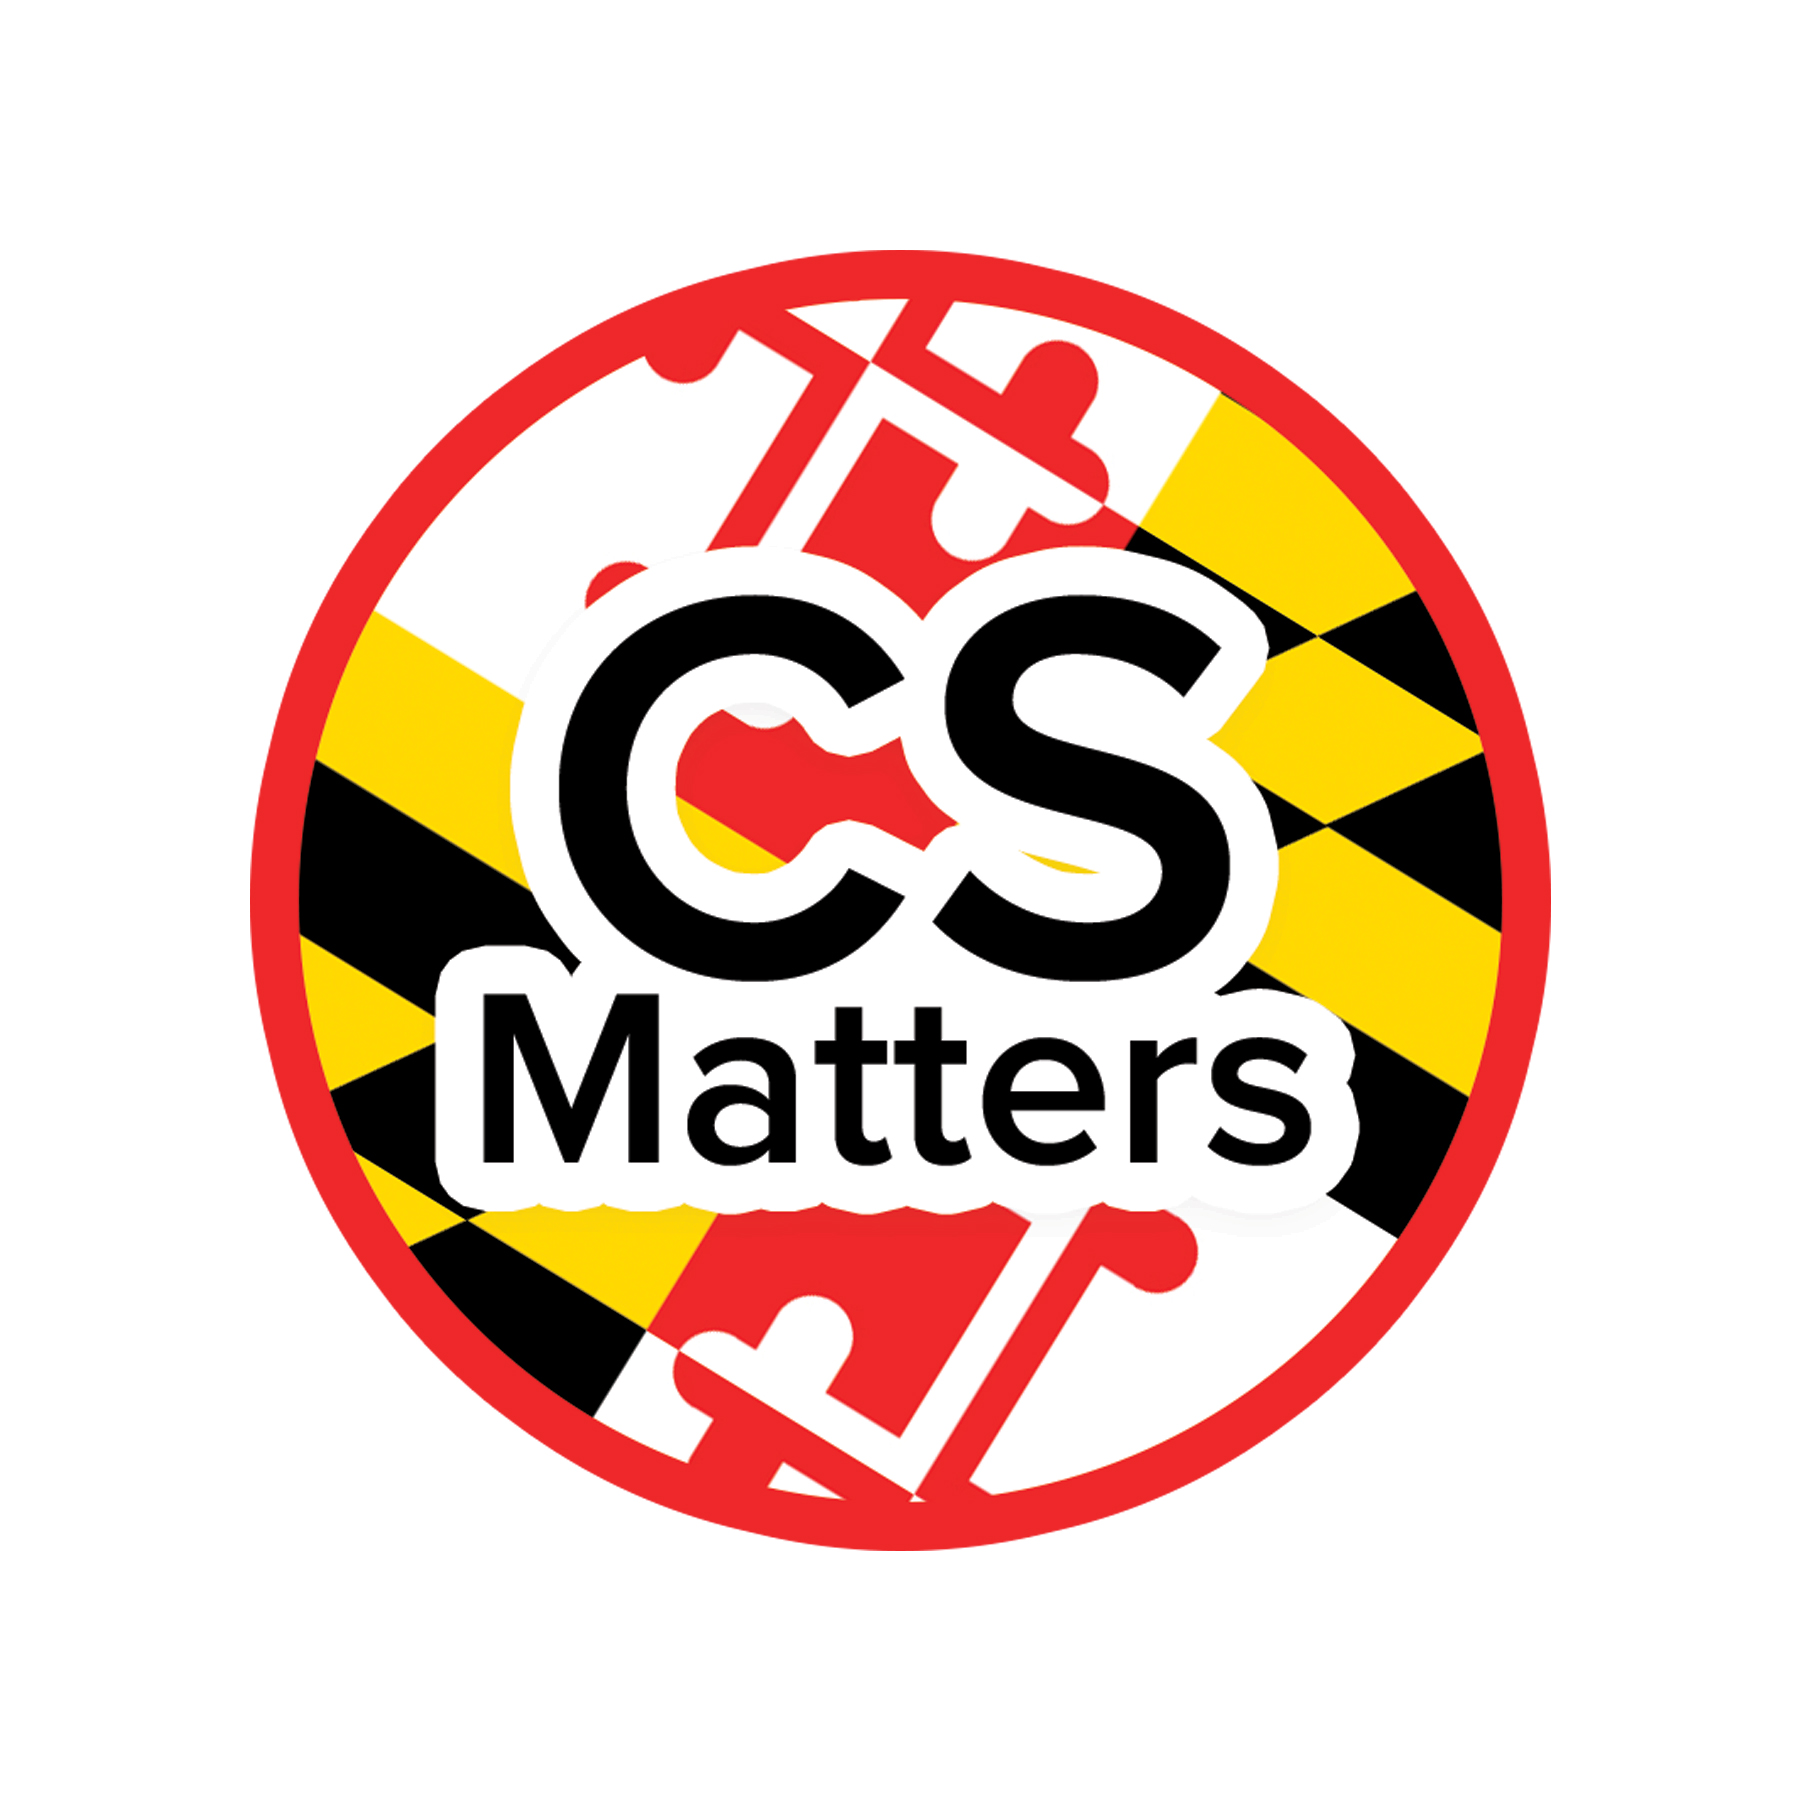 CS Matters in Maryland Logo